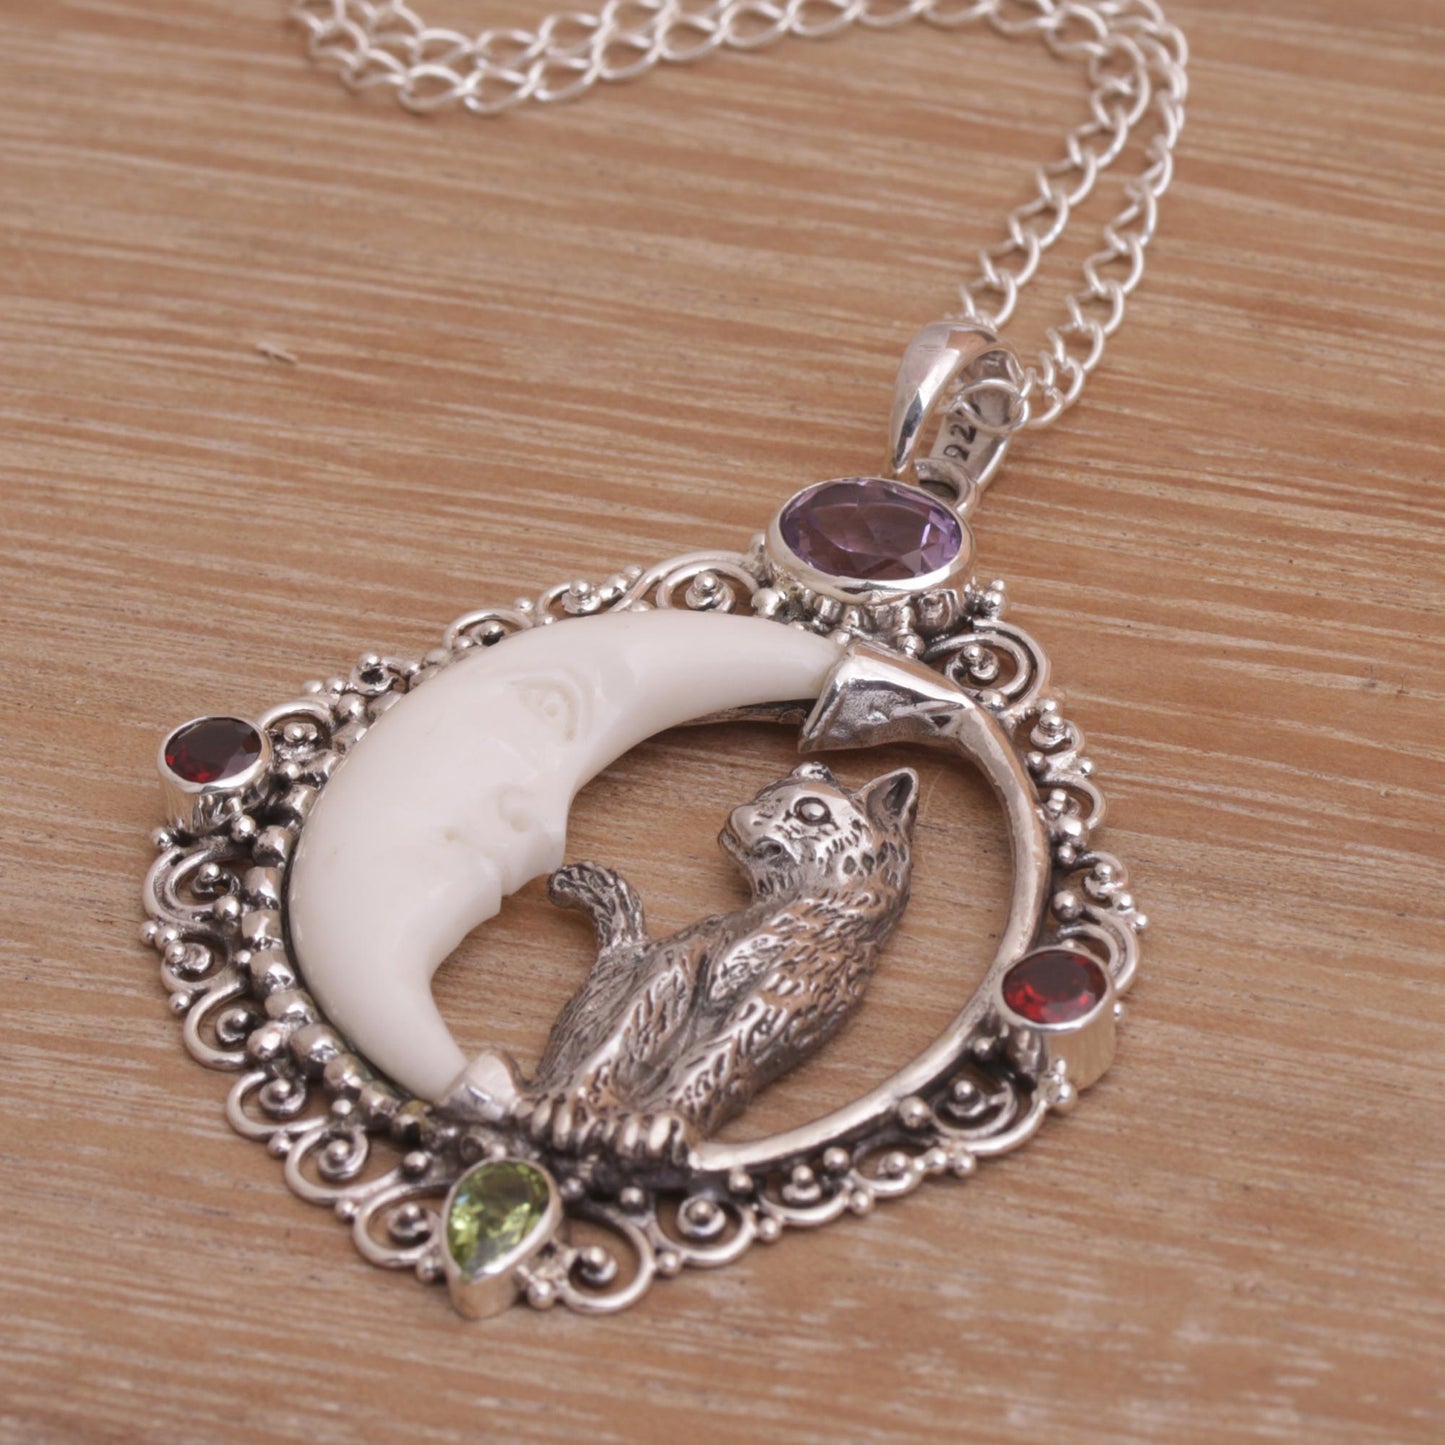 Alley Cat & Crescent Moon Pendant Necklace